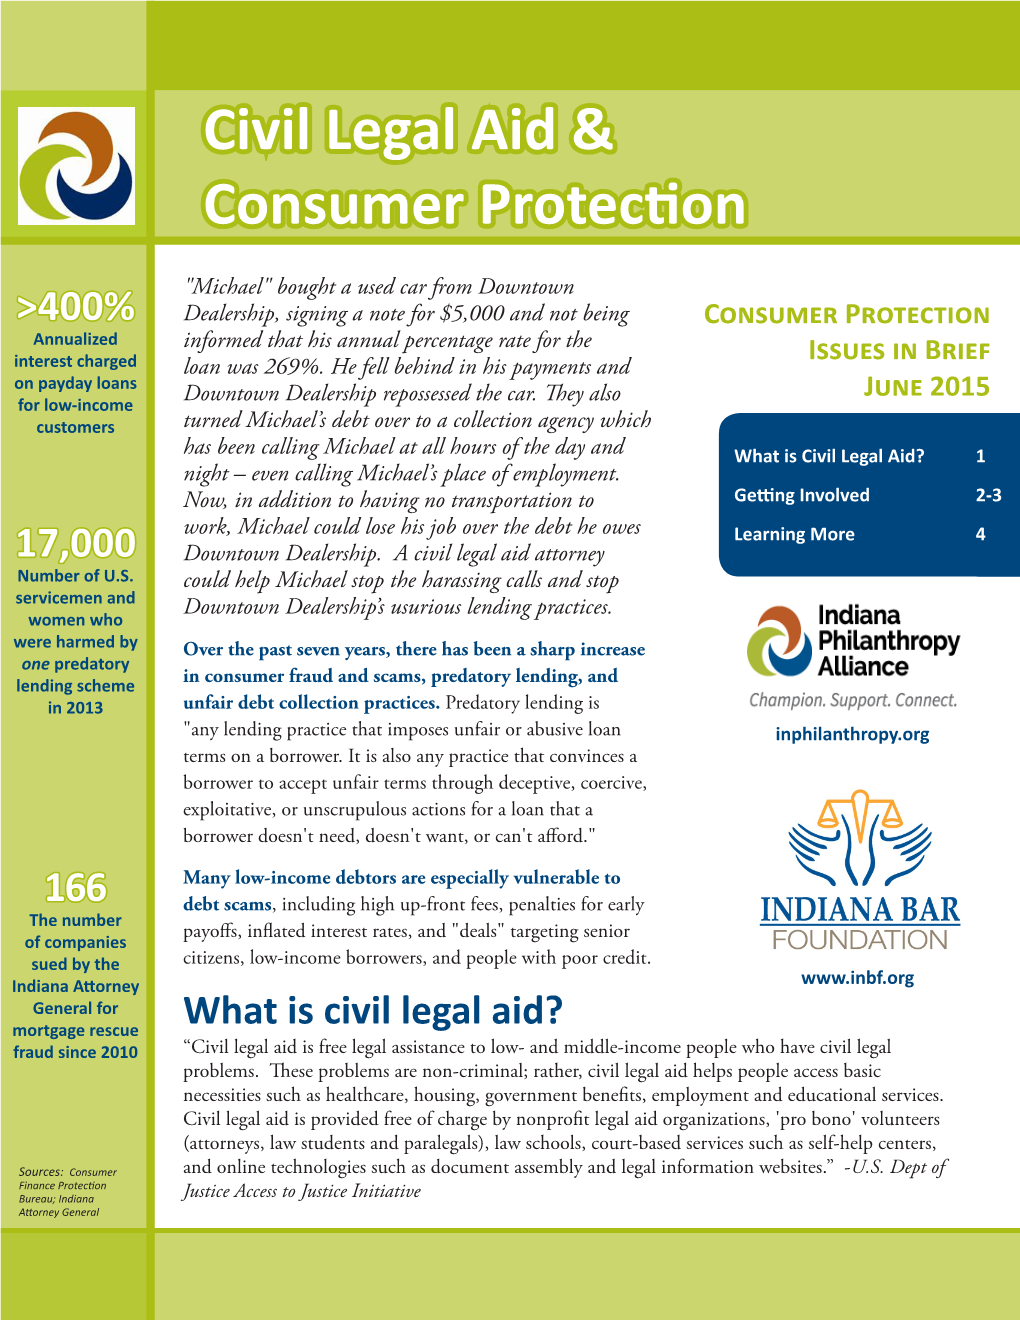 Civil Legal Aid & Consumer Protection Issue Brief